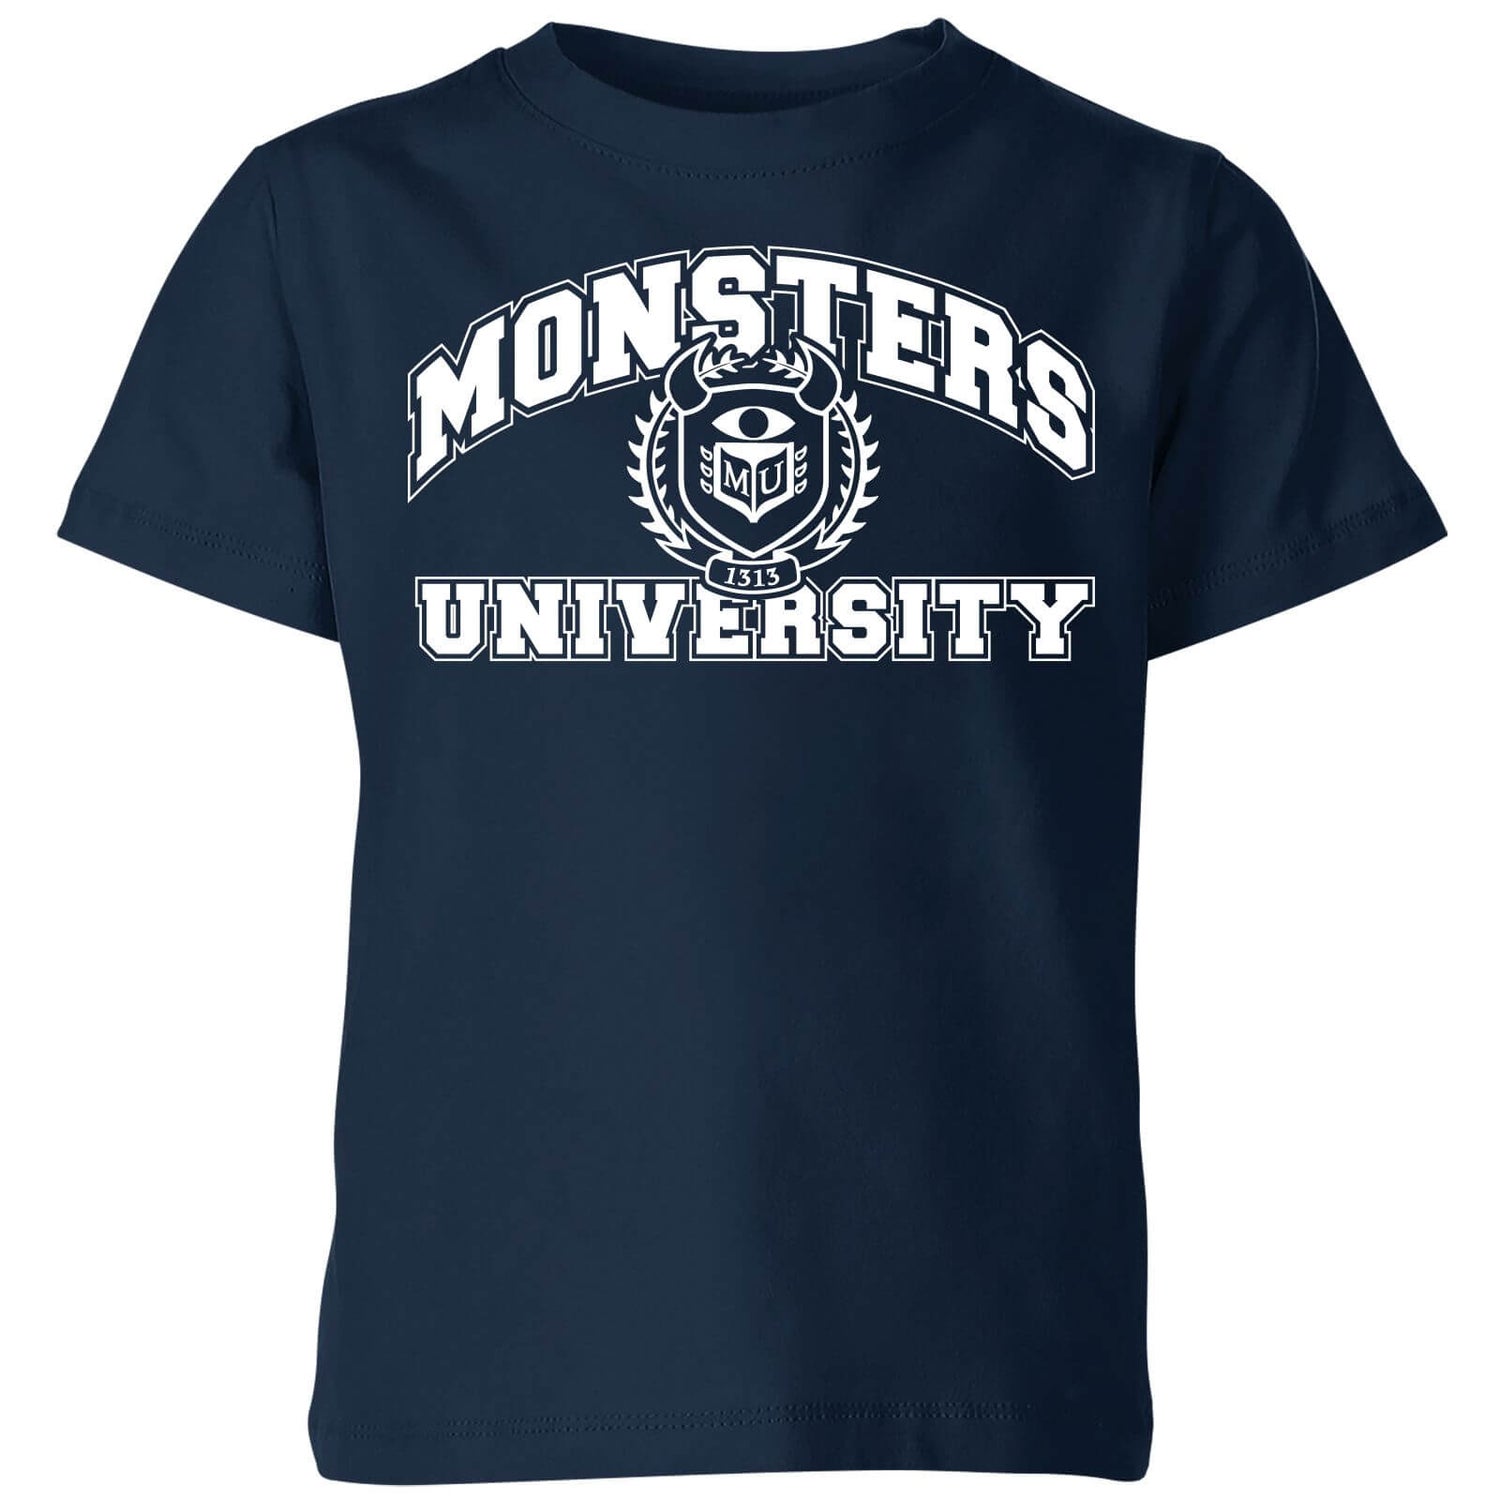 Monsters Inc. Monsters University Student Kids' T-Shirt - Navy